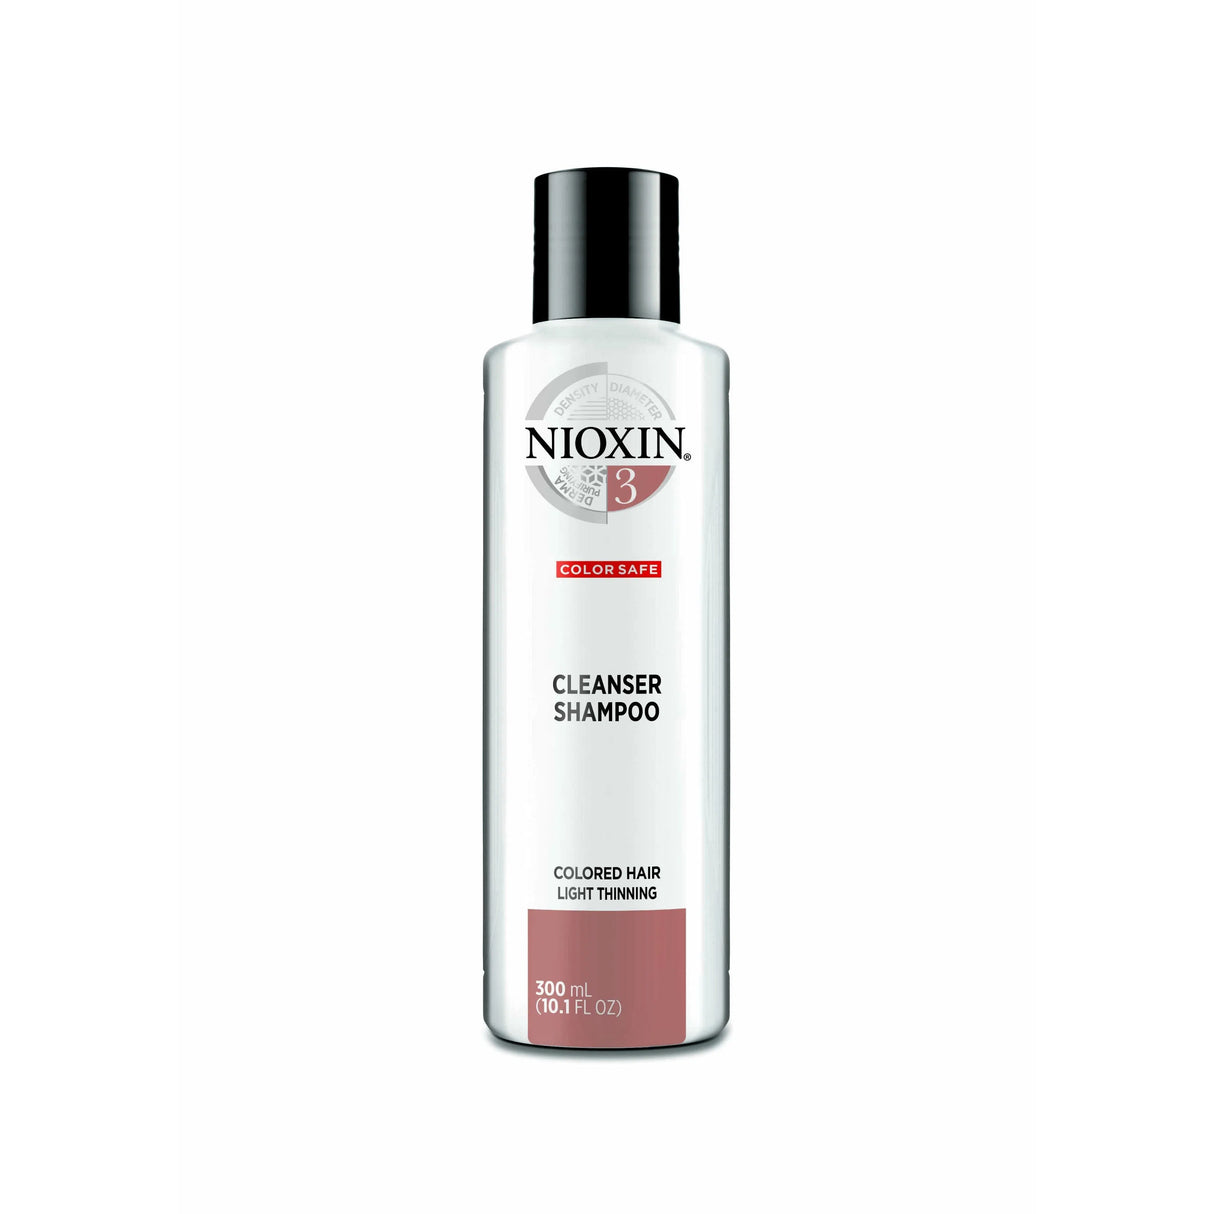 System 3 Cleanser Shampoo-Nioxin